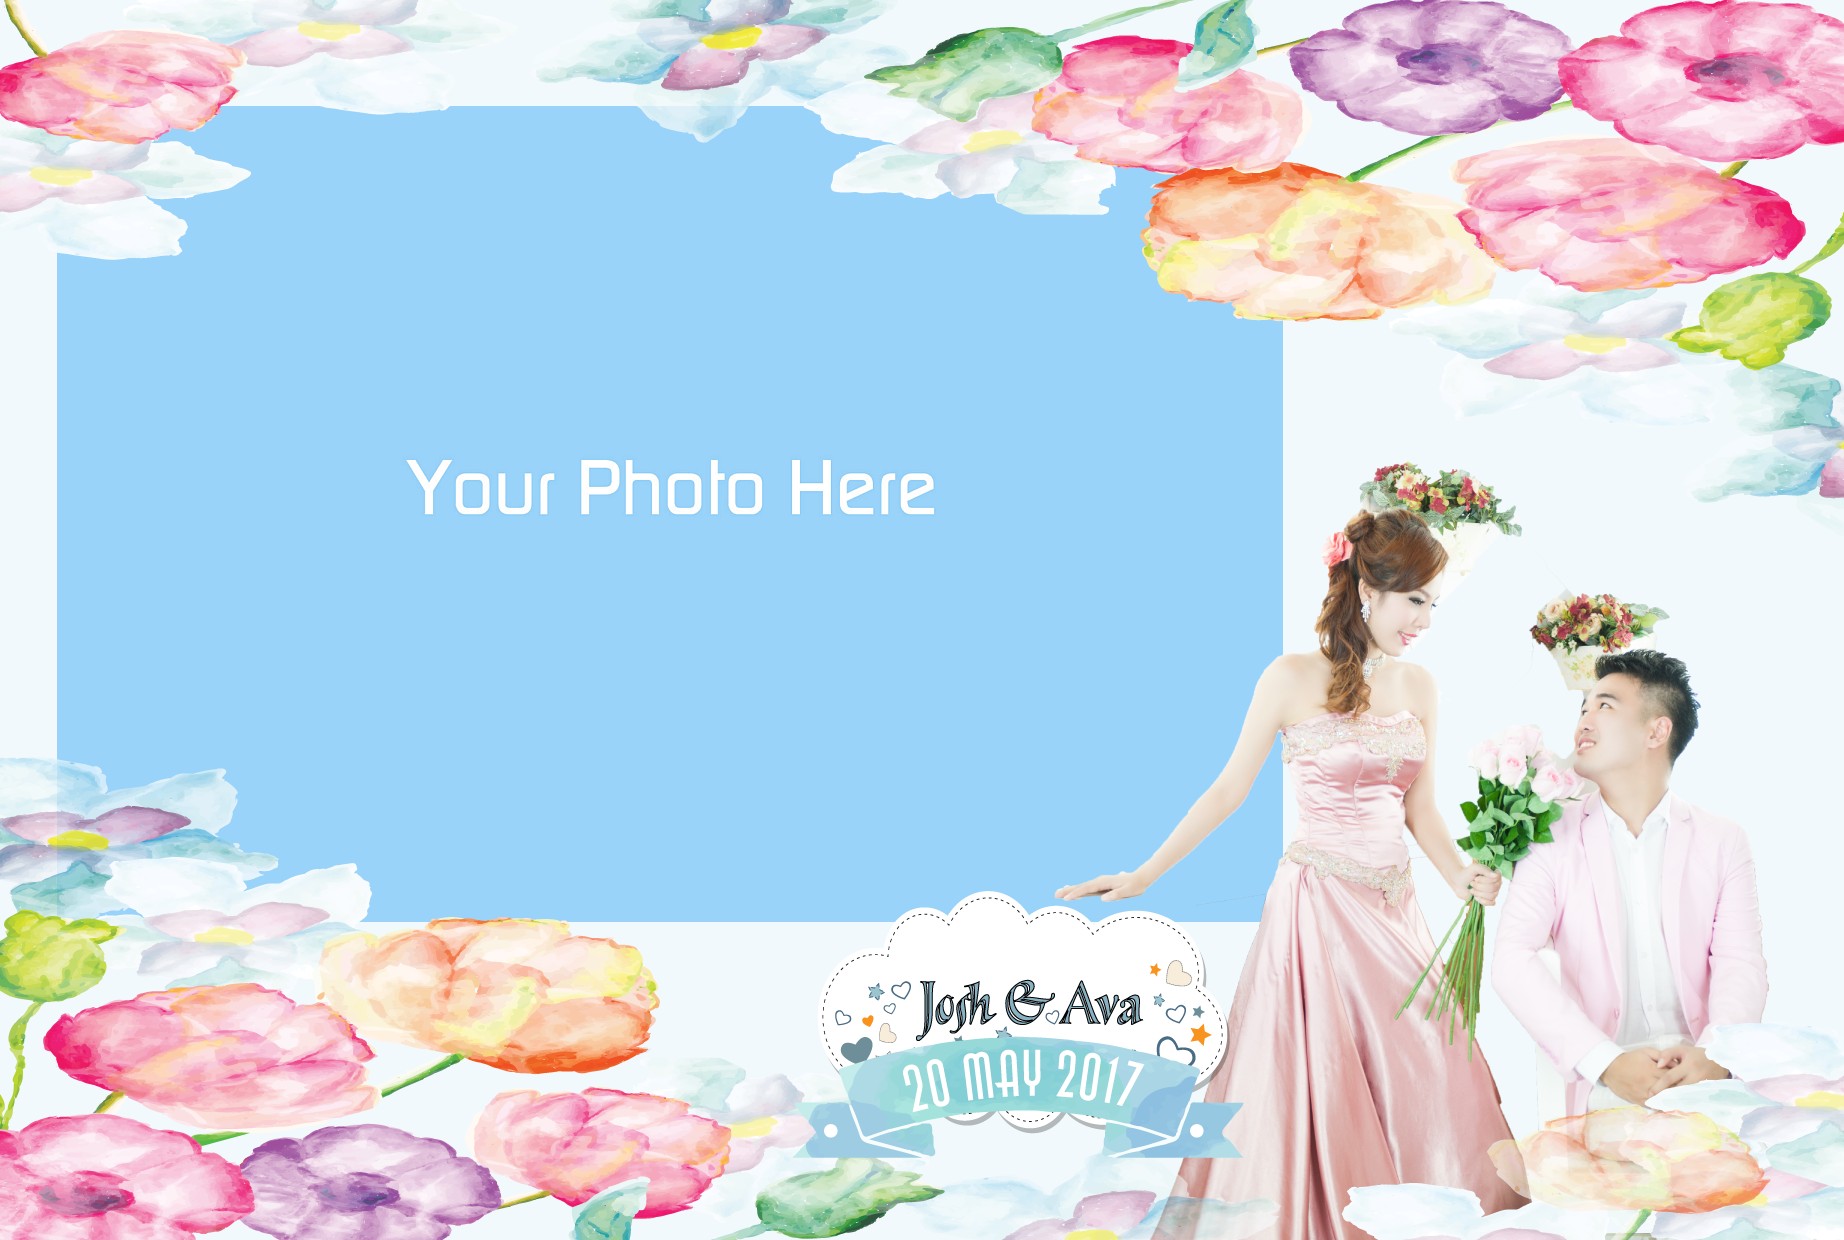 Photobooth Promotion